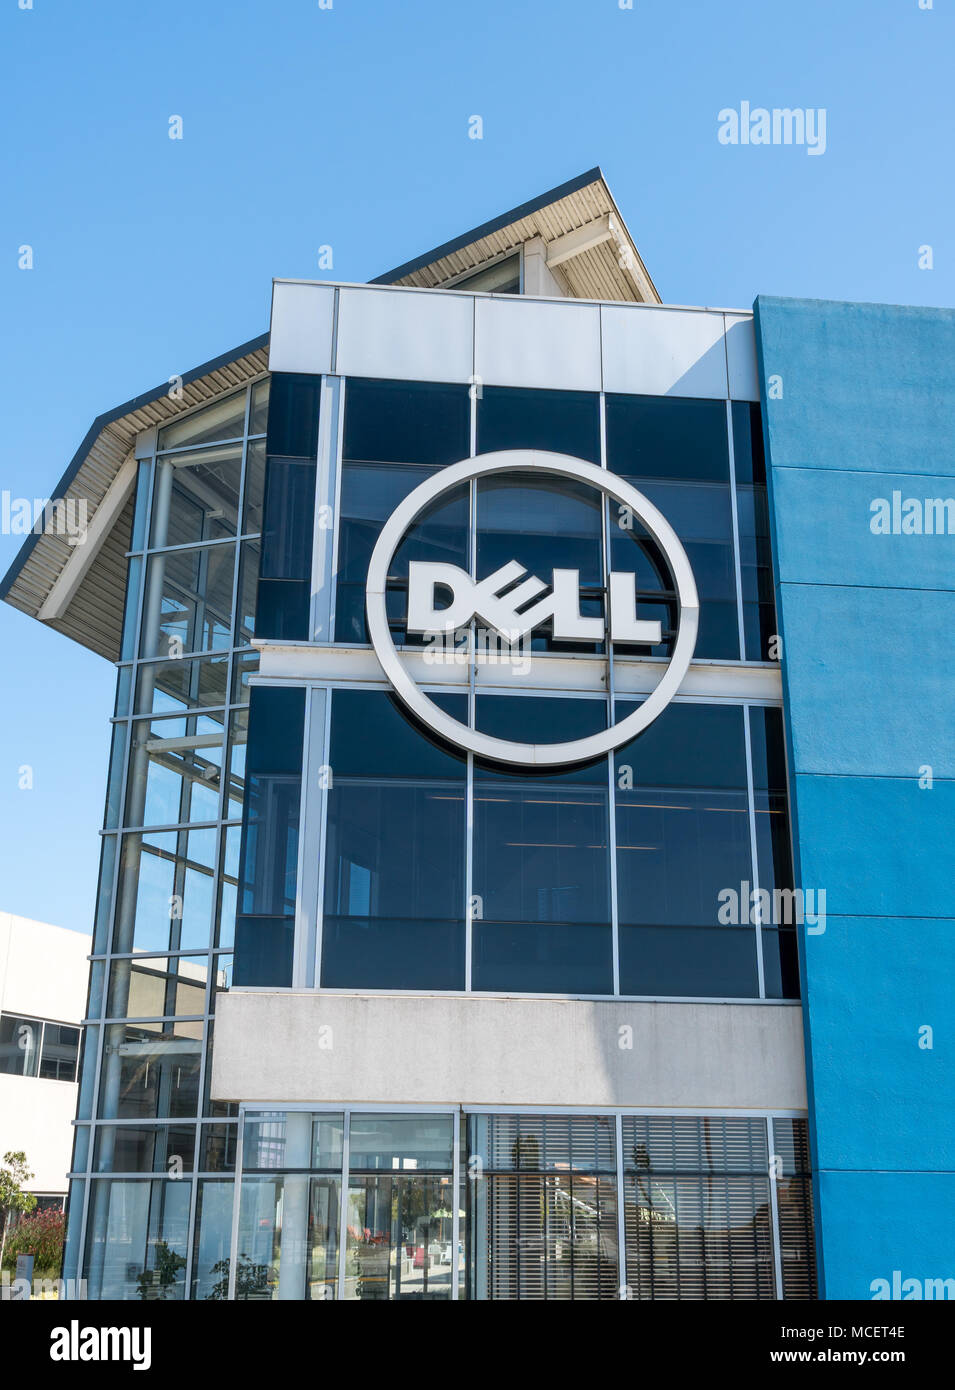 SANTA CLARA, CA/USA - JULY 29, 2017: Dell computer corporate facility and logo. Dell Inc. is a multinational computer technology company. Stock Photo